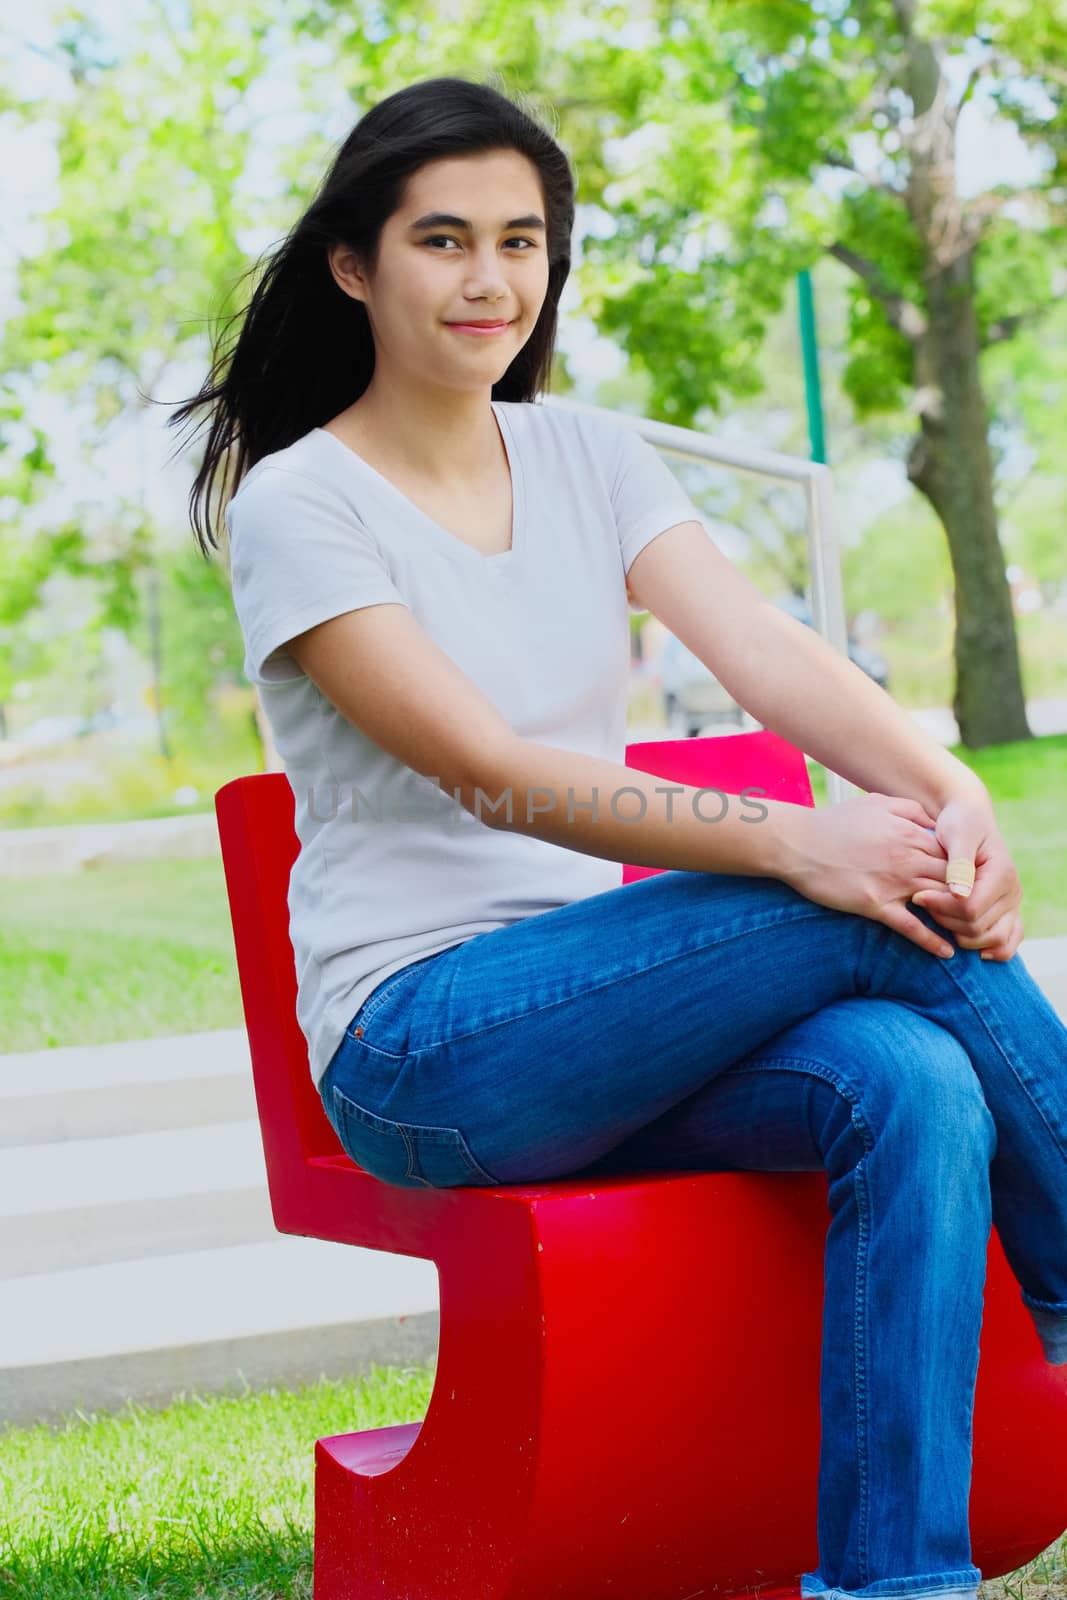 Beautiful biracial teen girl relaxing outdoors on red chair in summer